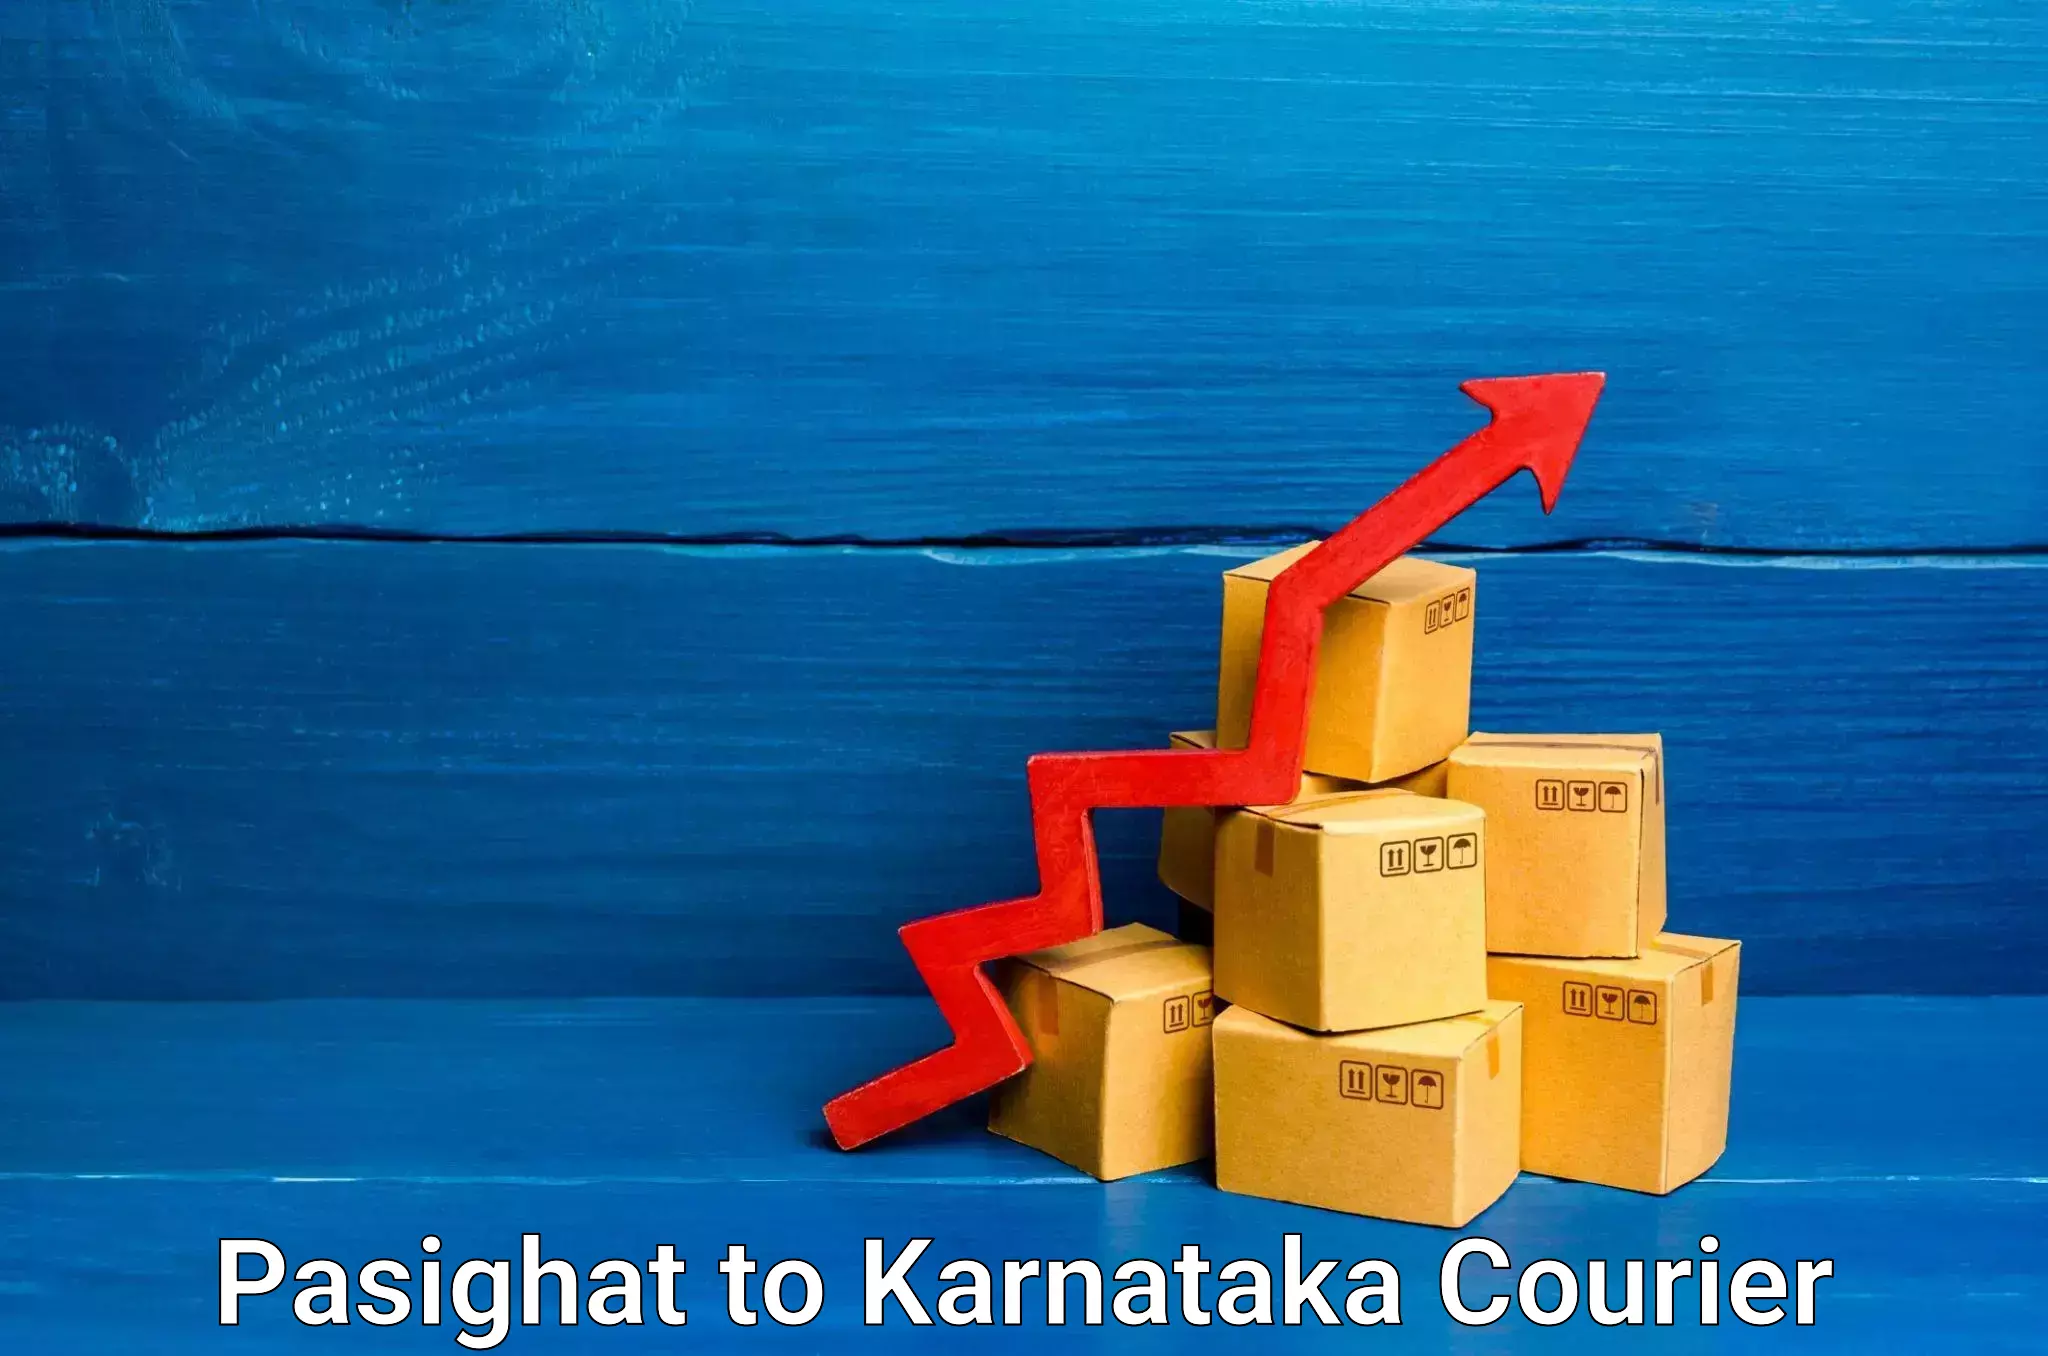 User-friendly delivery service Pasighat to Karnataka